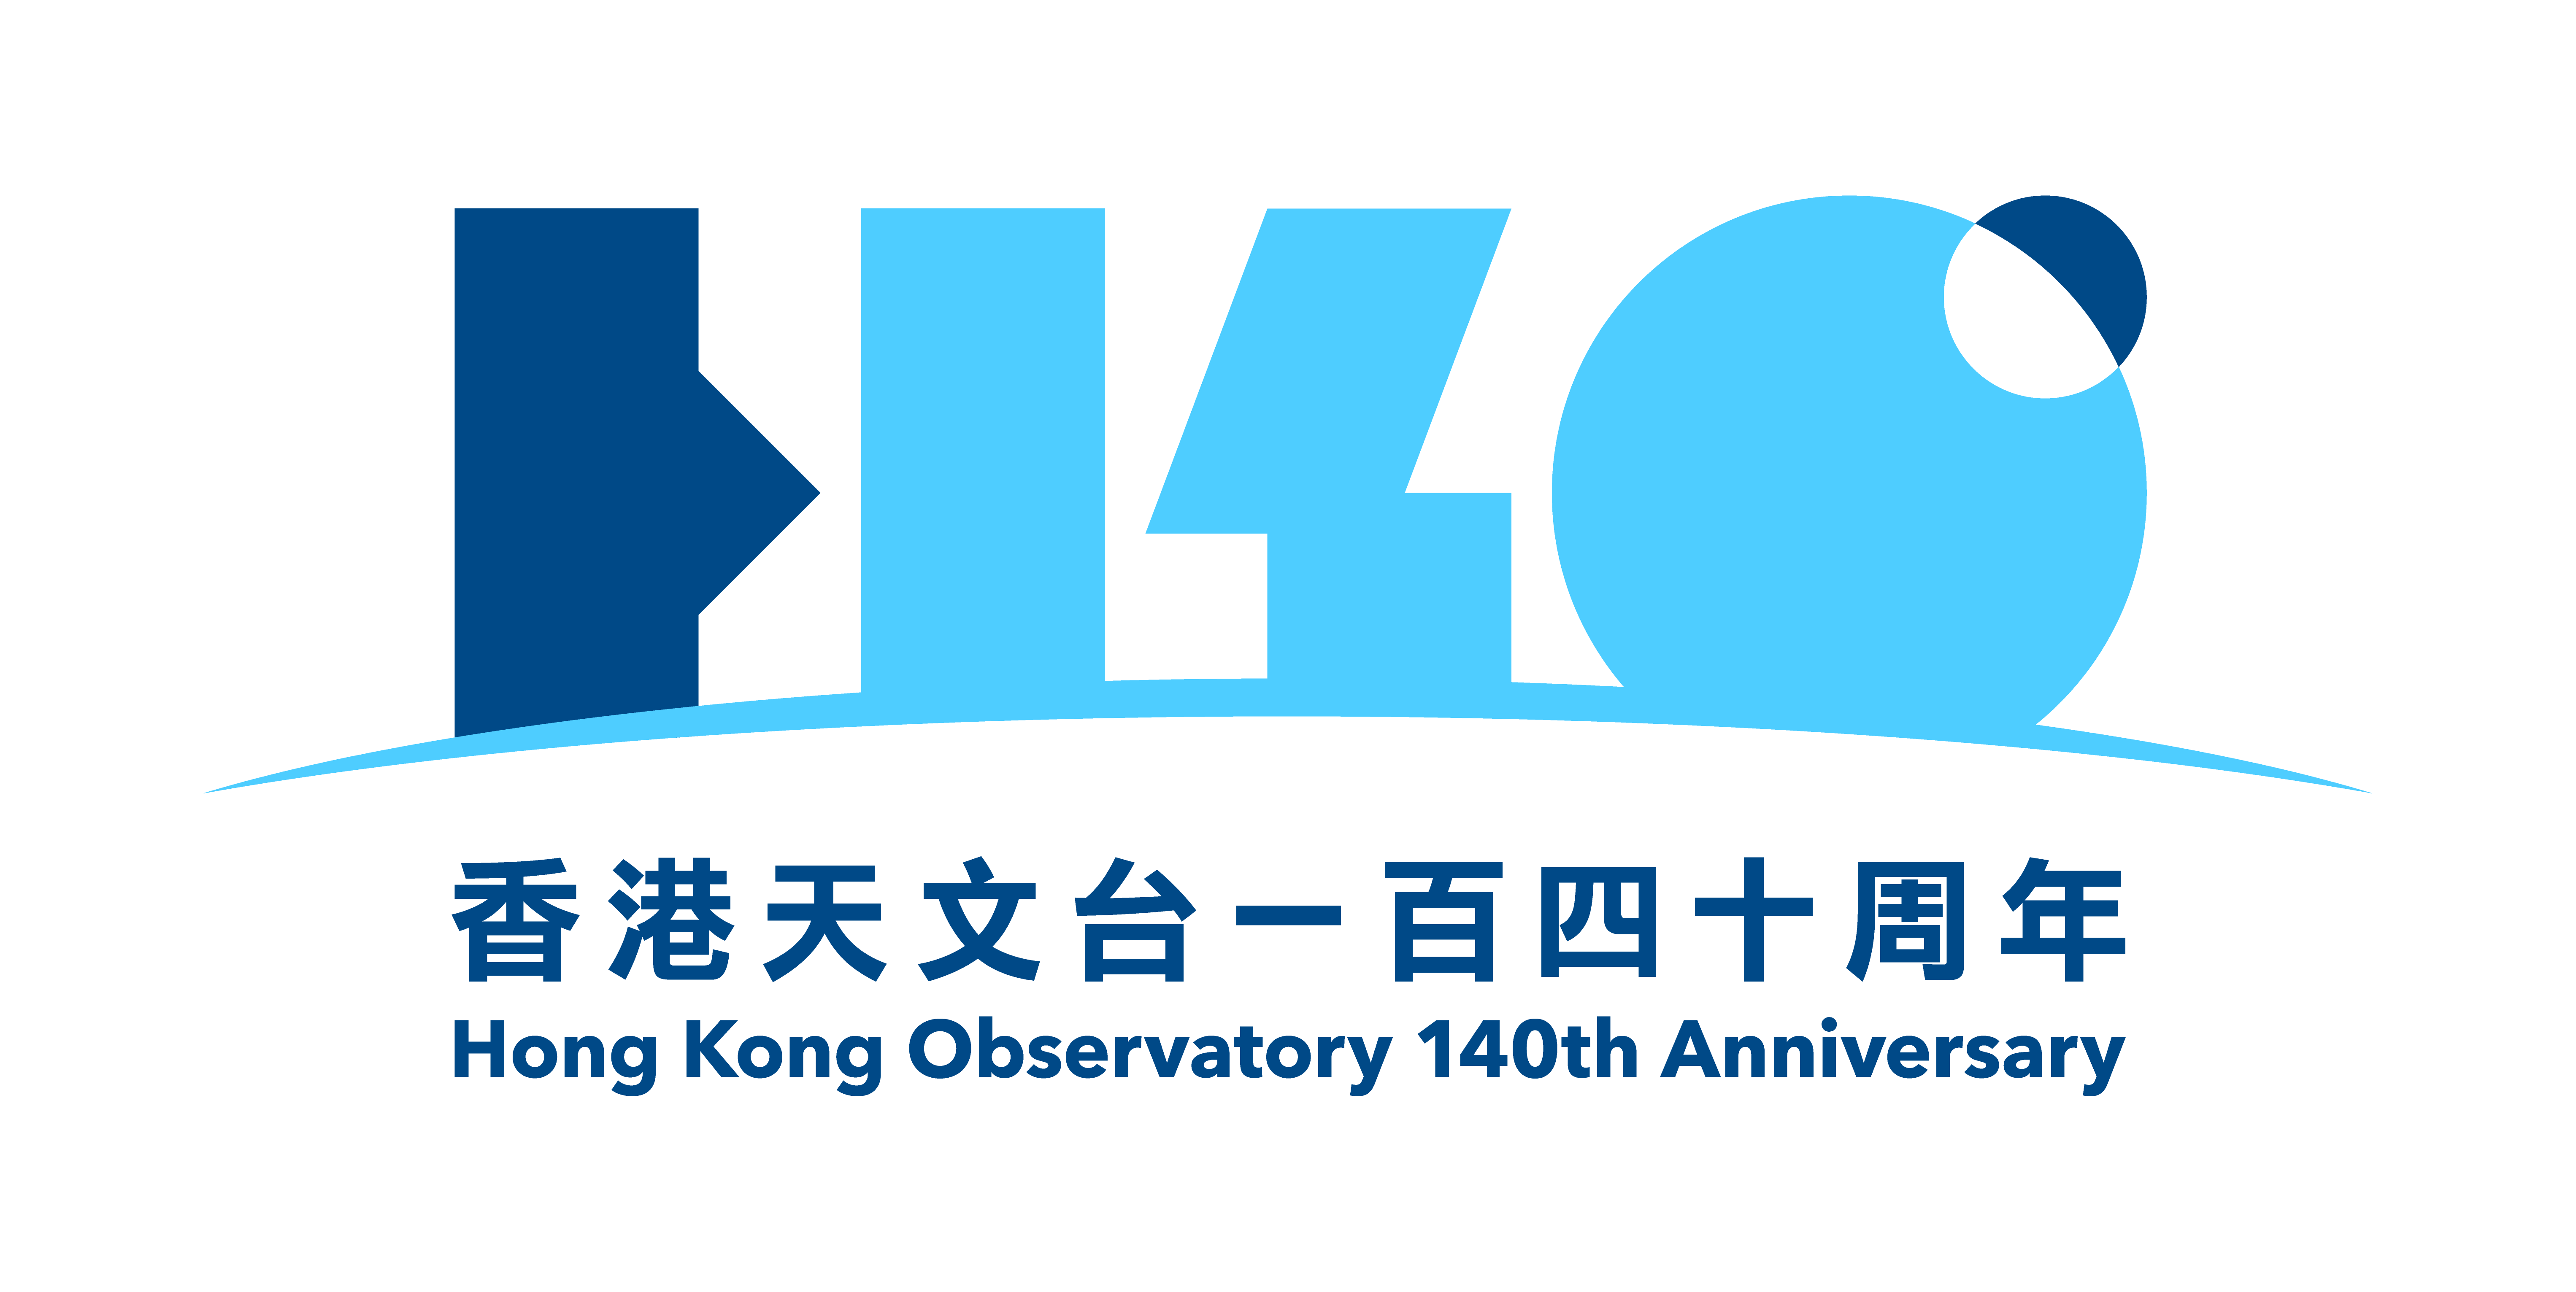 Hong Kong Observatory 140th Anniversary logo